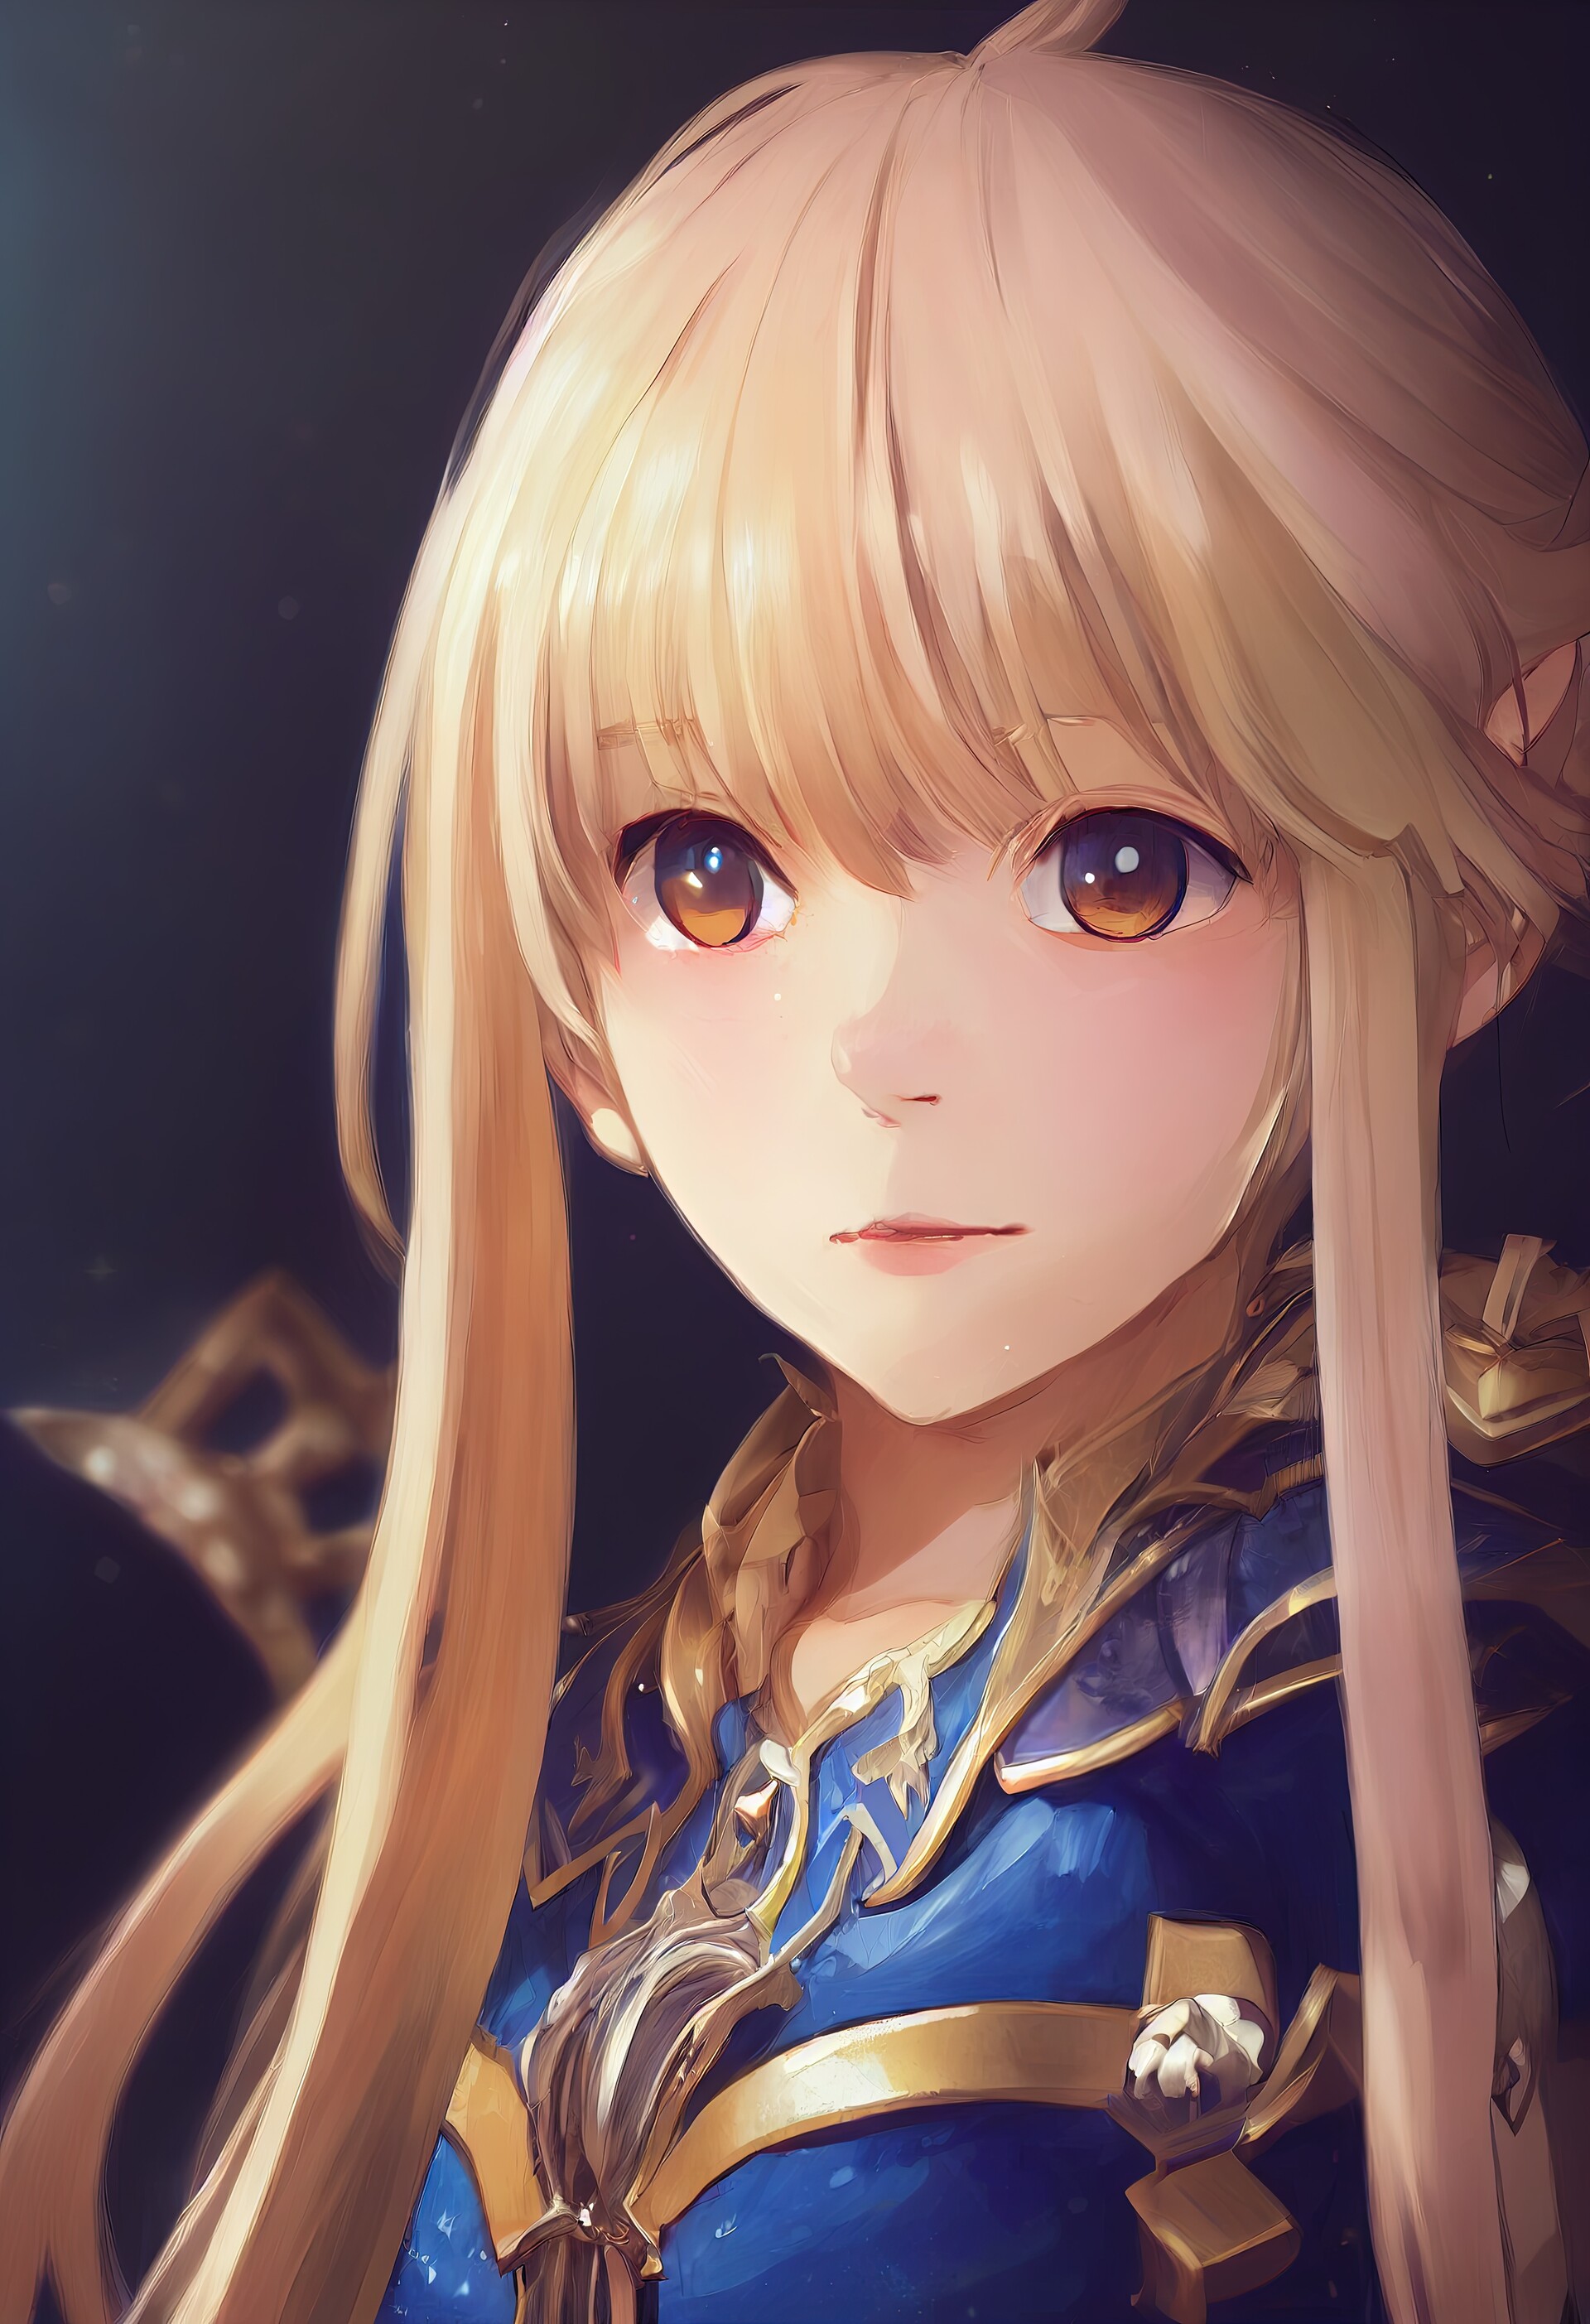 ArtStation - Blond female knight in blue armor